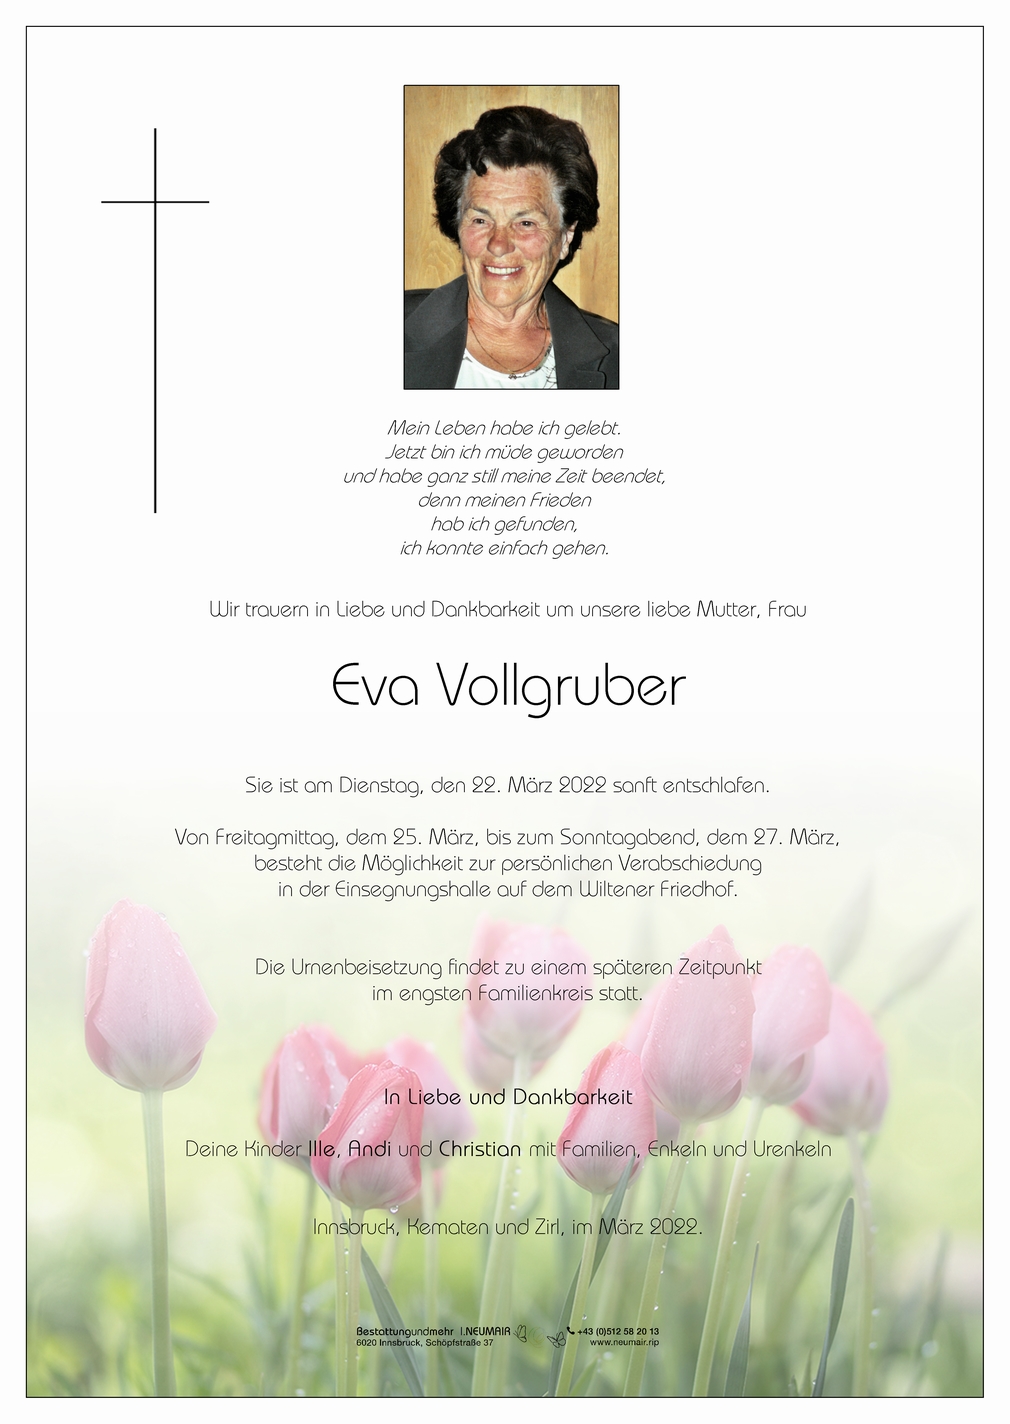 Eva Vollgruber